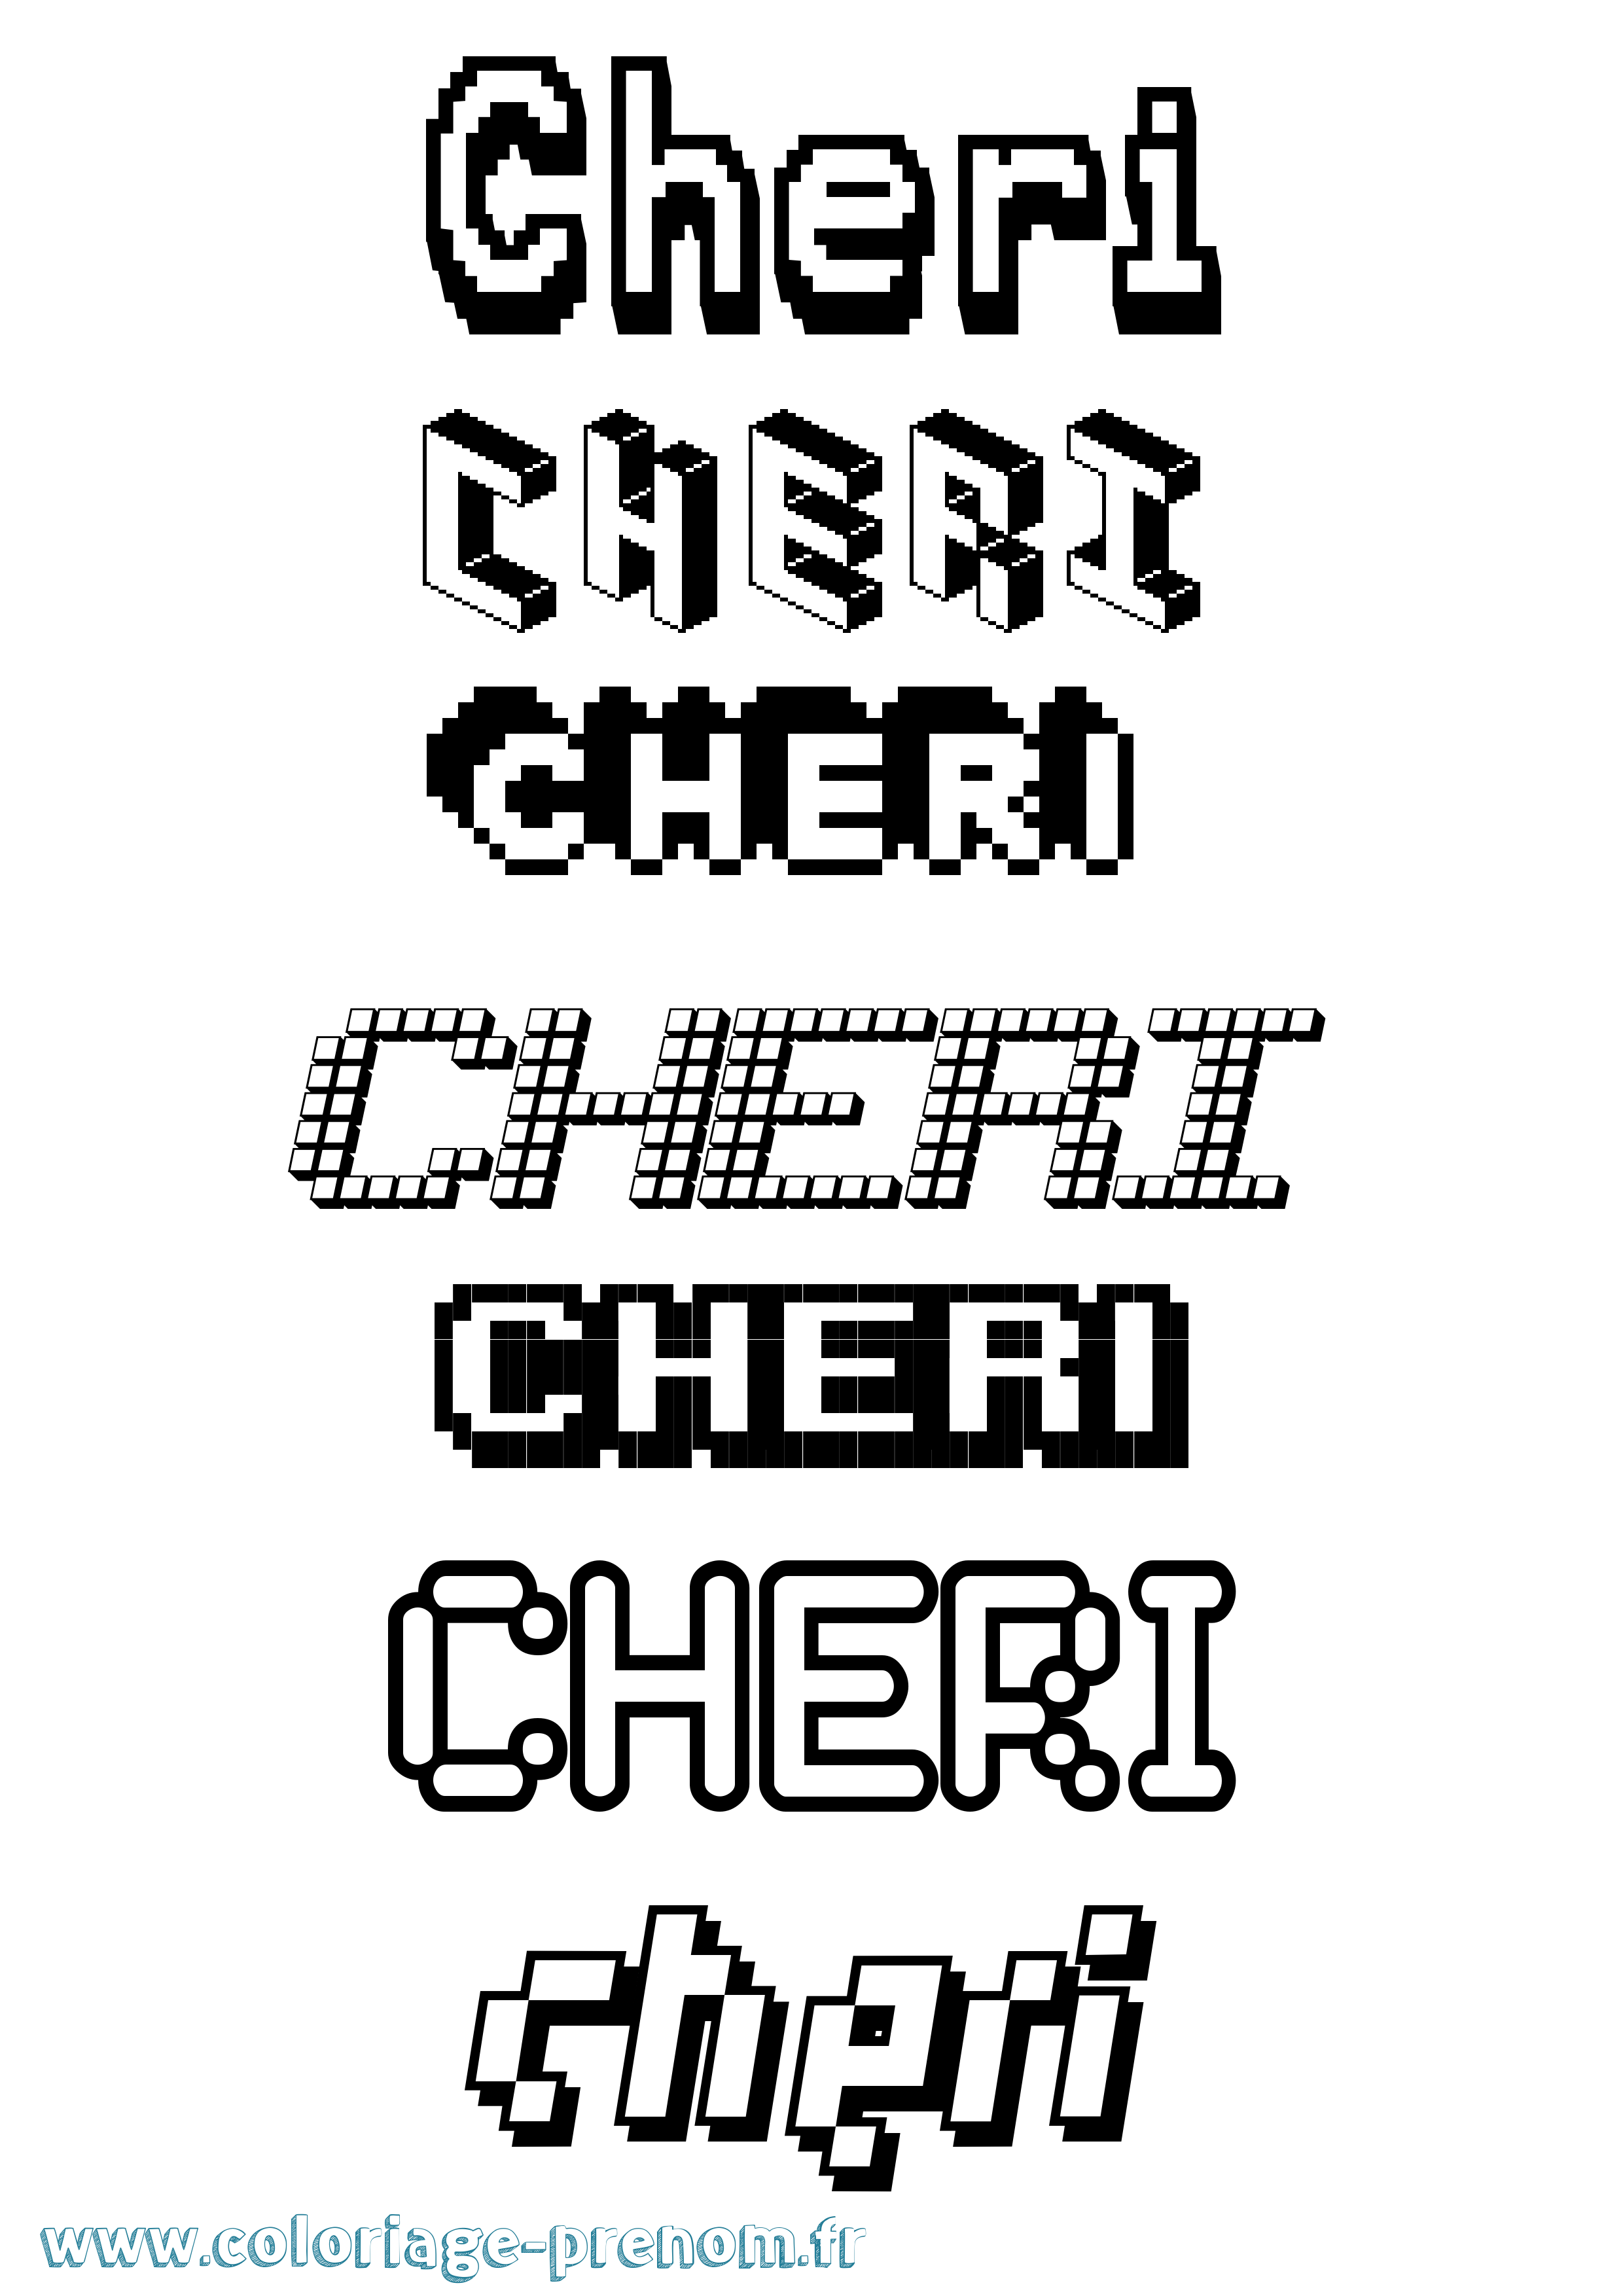 Coloriage prénom Cheri Pixel